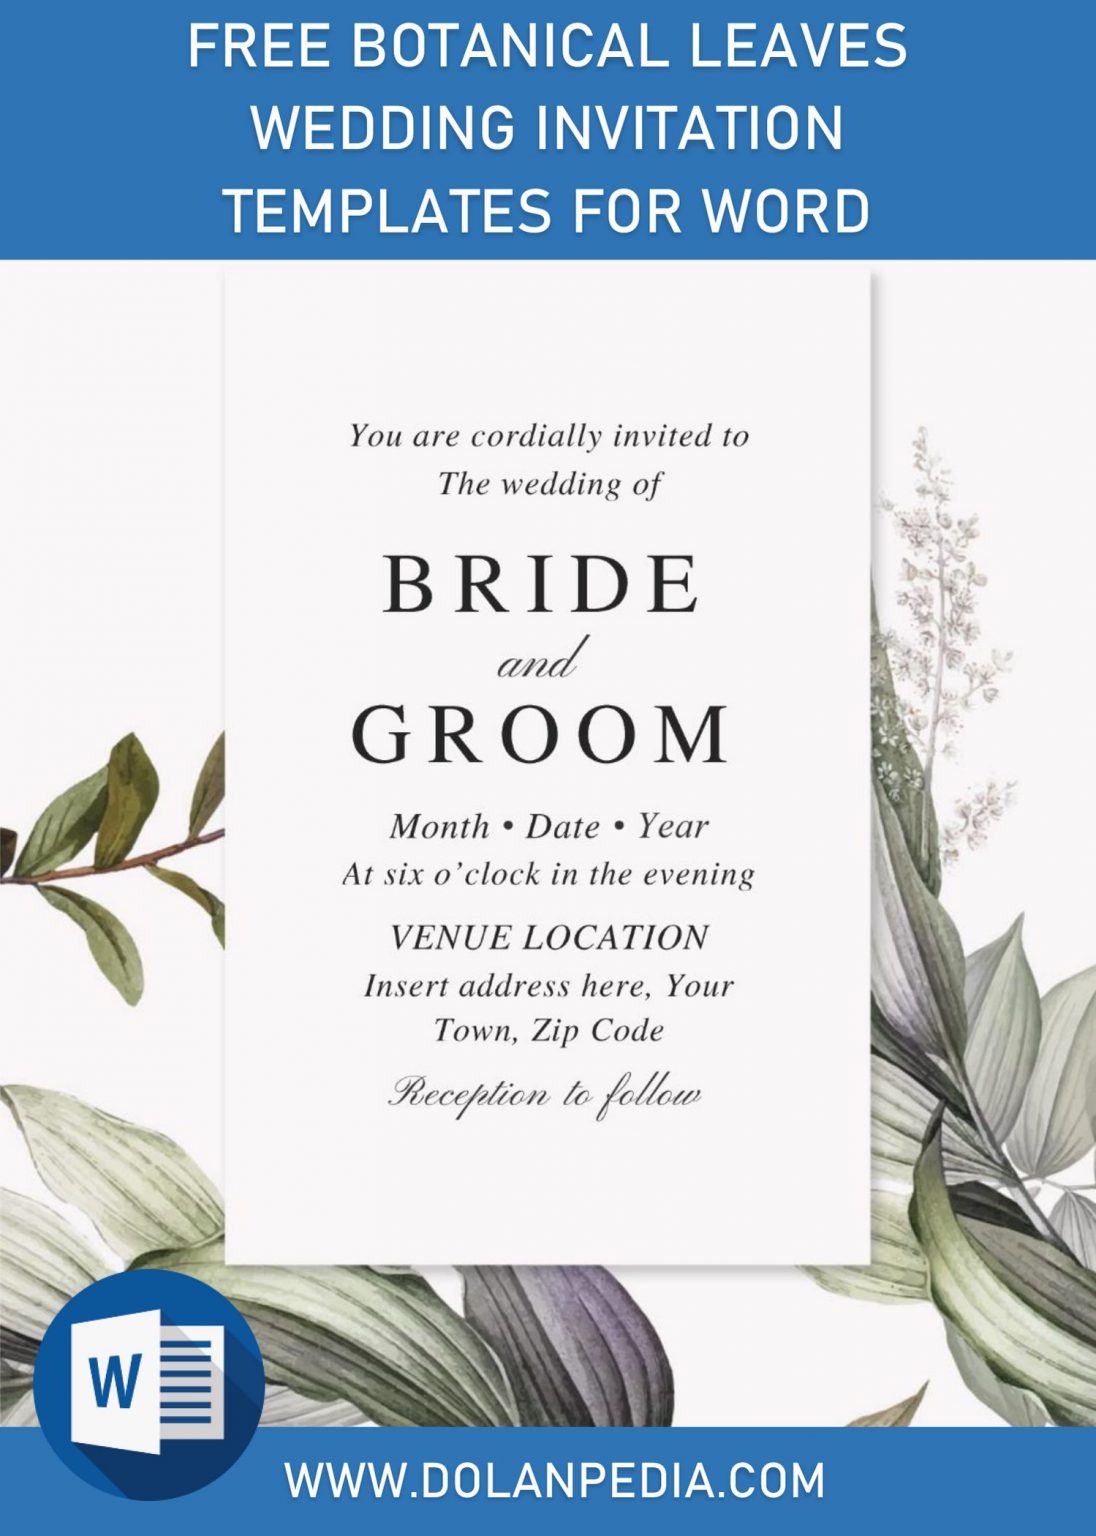 Free Botanical Leaves Wedding Invitation Templates For Word | Dolanpedia